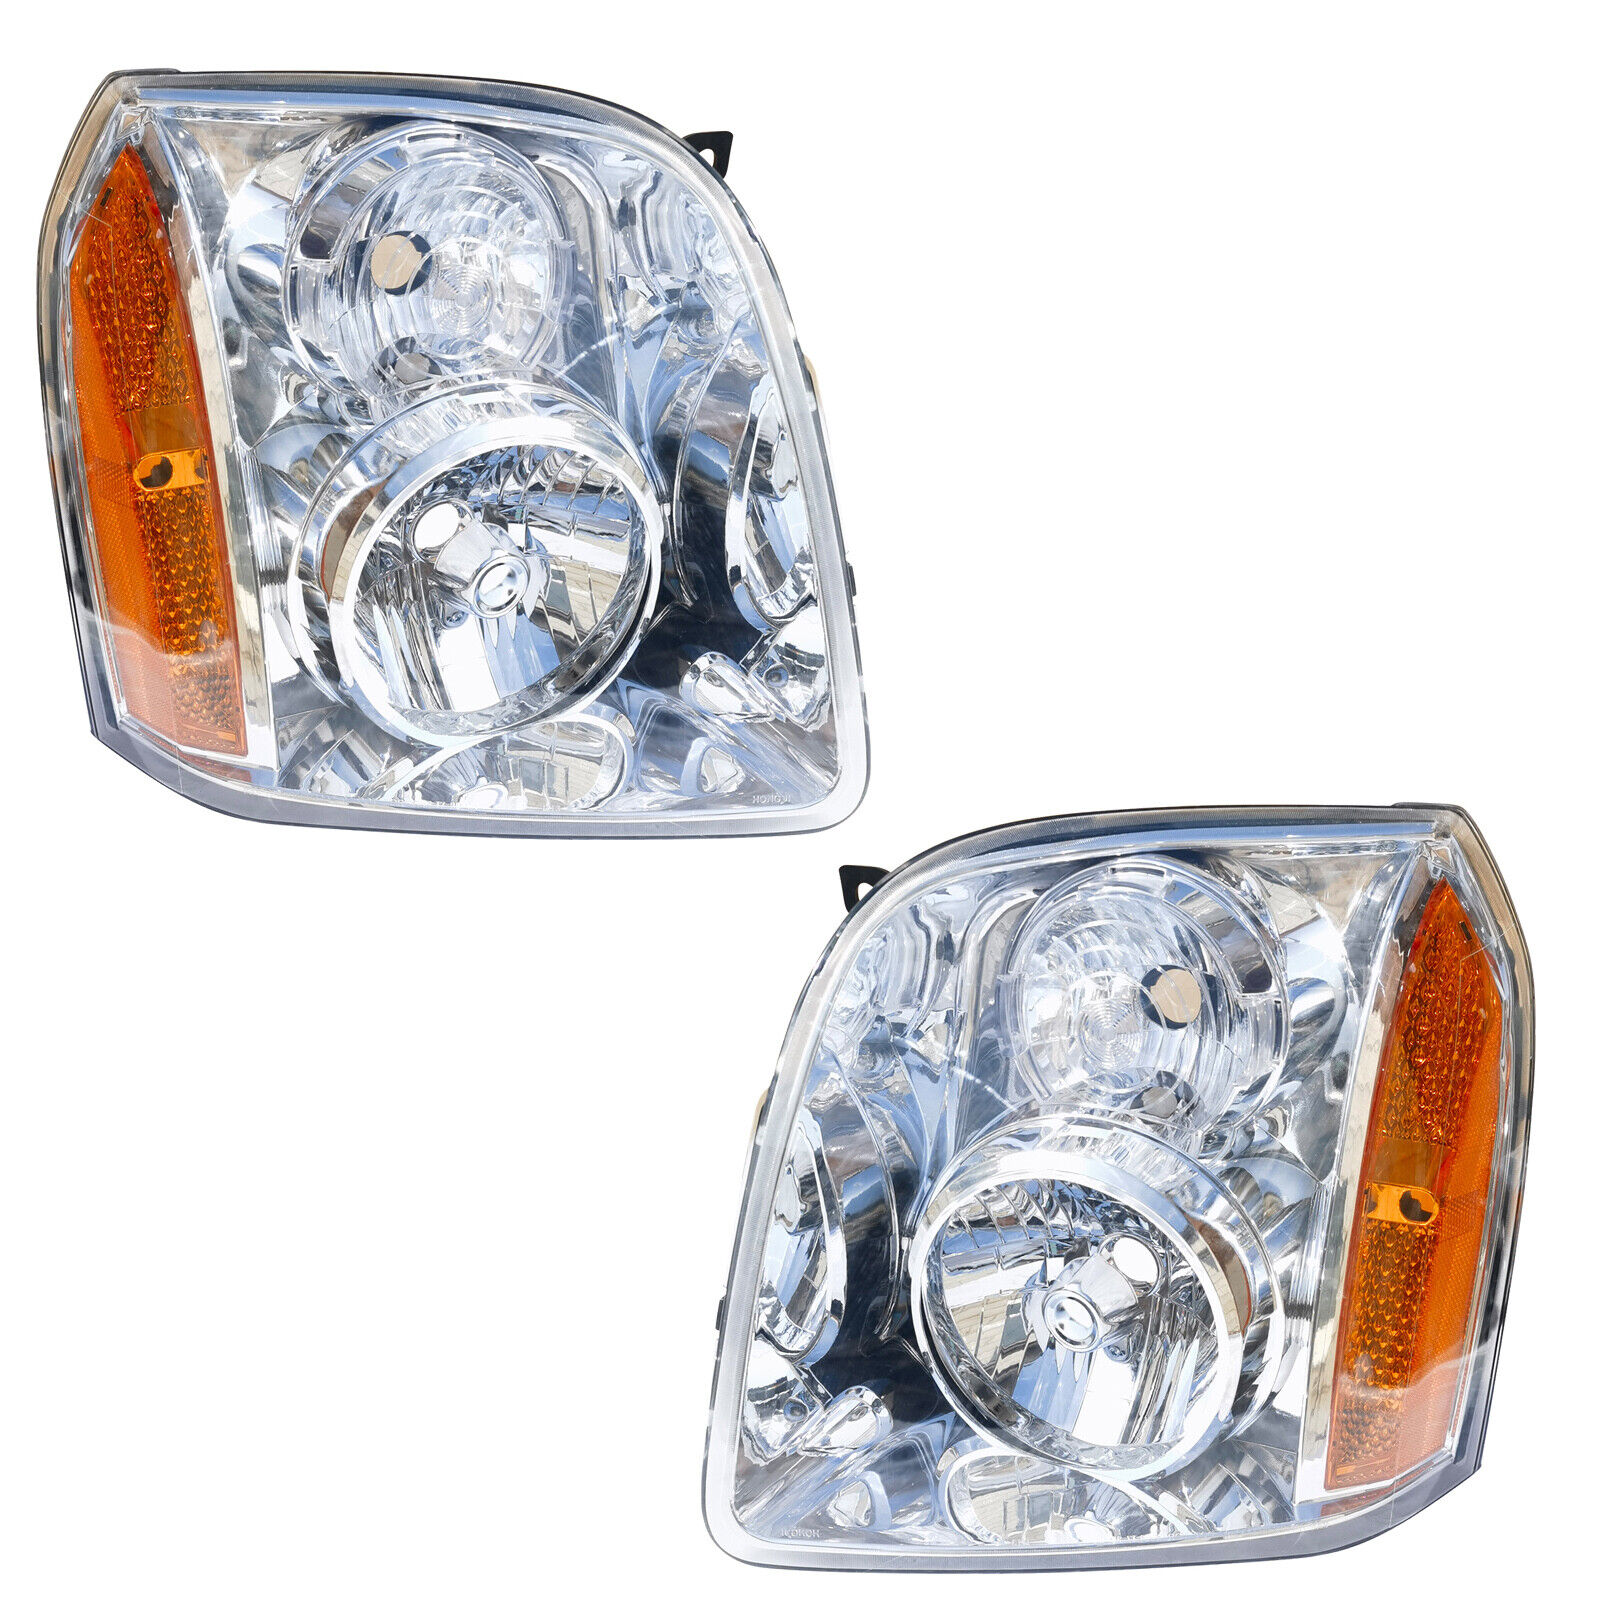 Headlight for 2007-2014 GMC Yukon XL 1500 XL 2500,Clear Lens, 1 Pair Headlamps